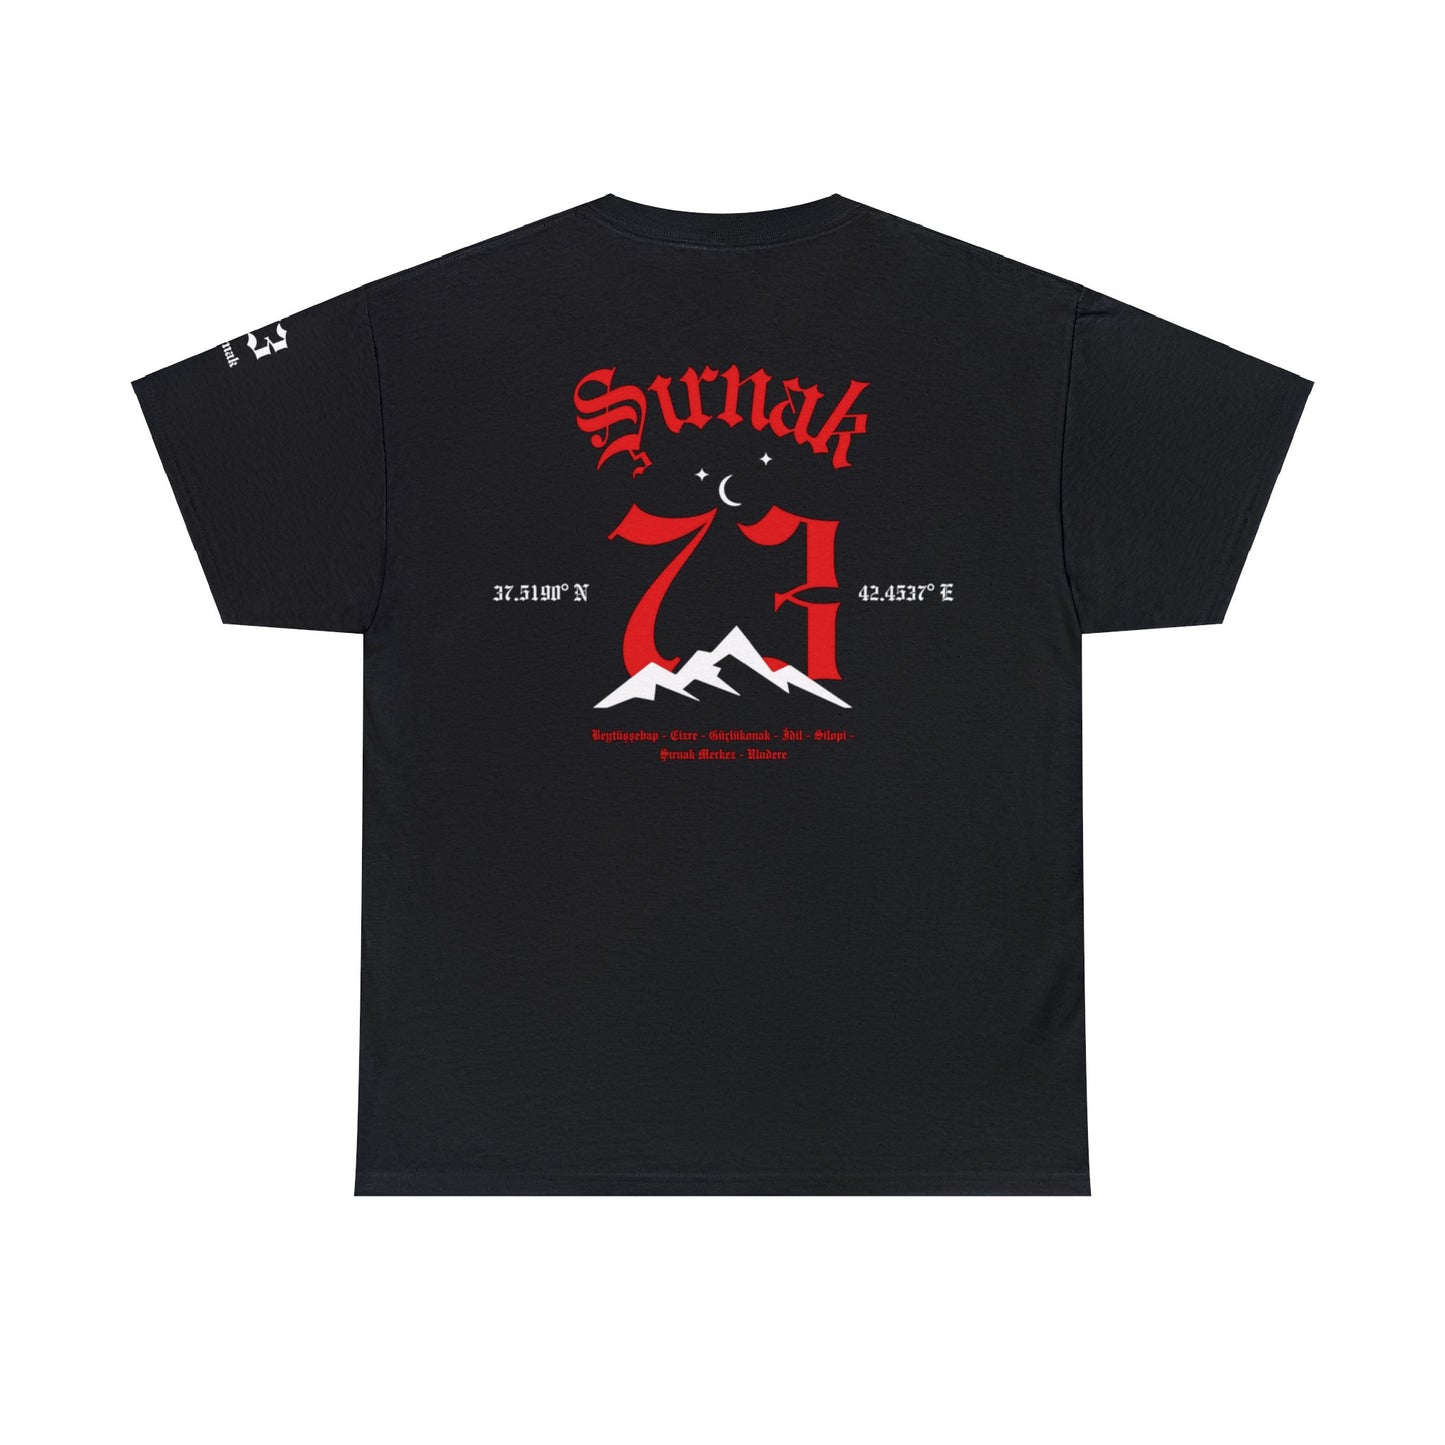 İlçem - 73 Şırnak - T-Shirt - Back Print - Black